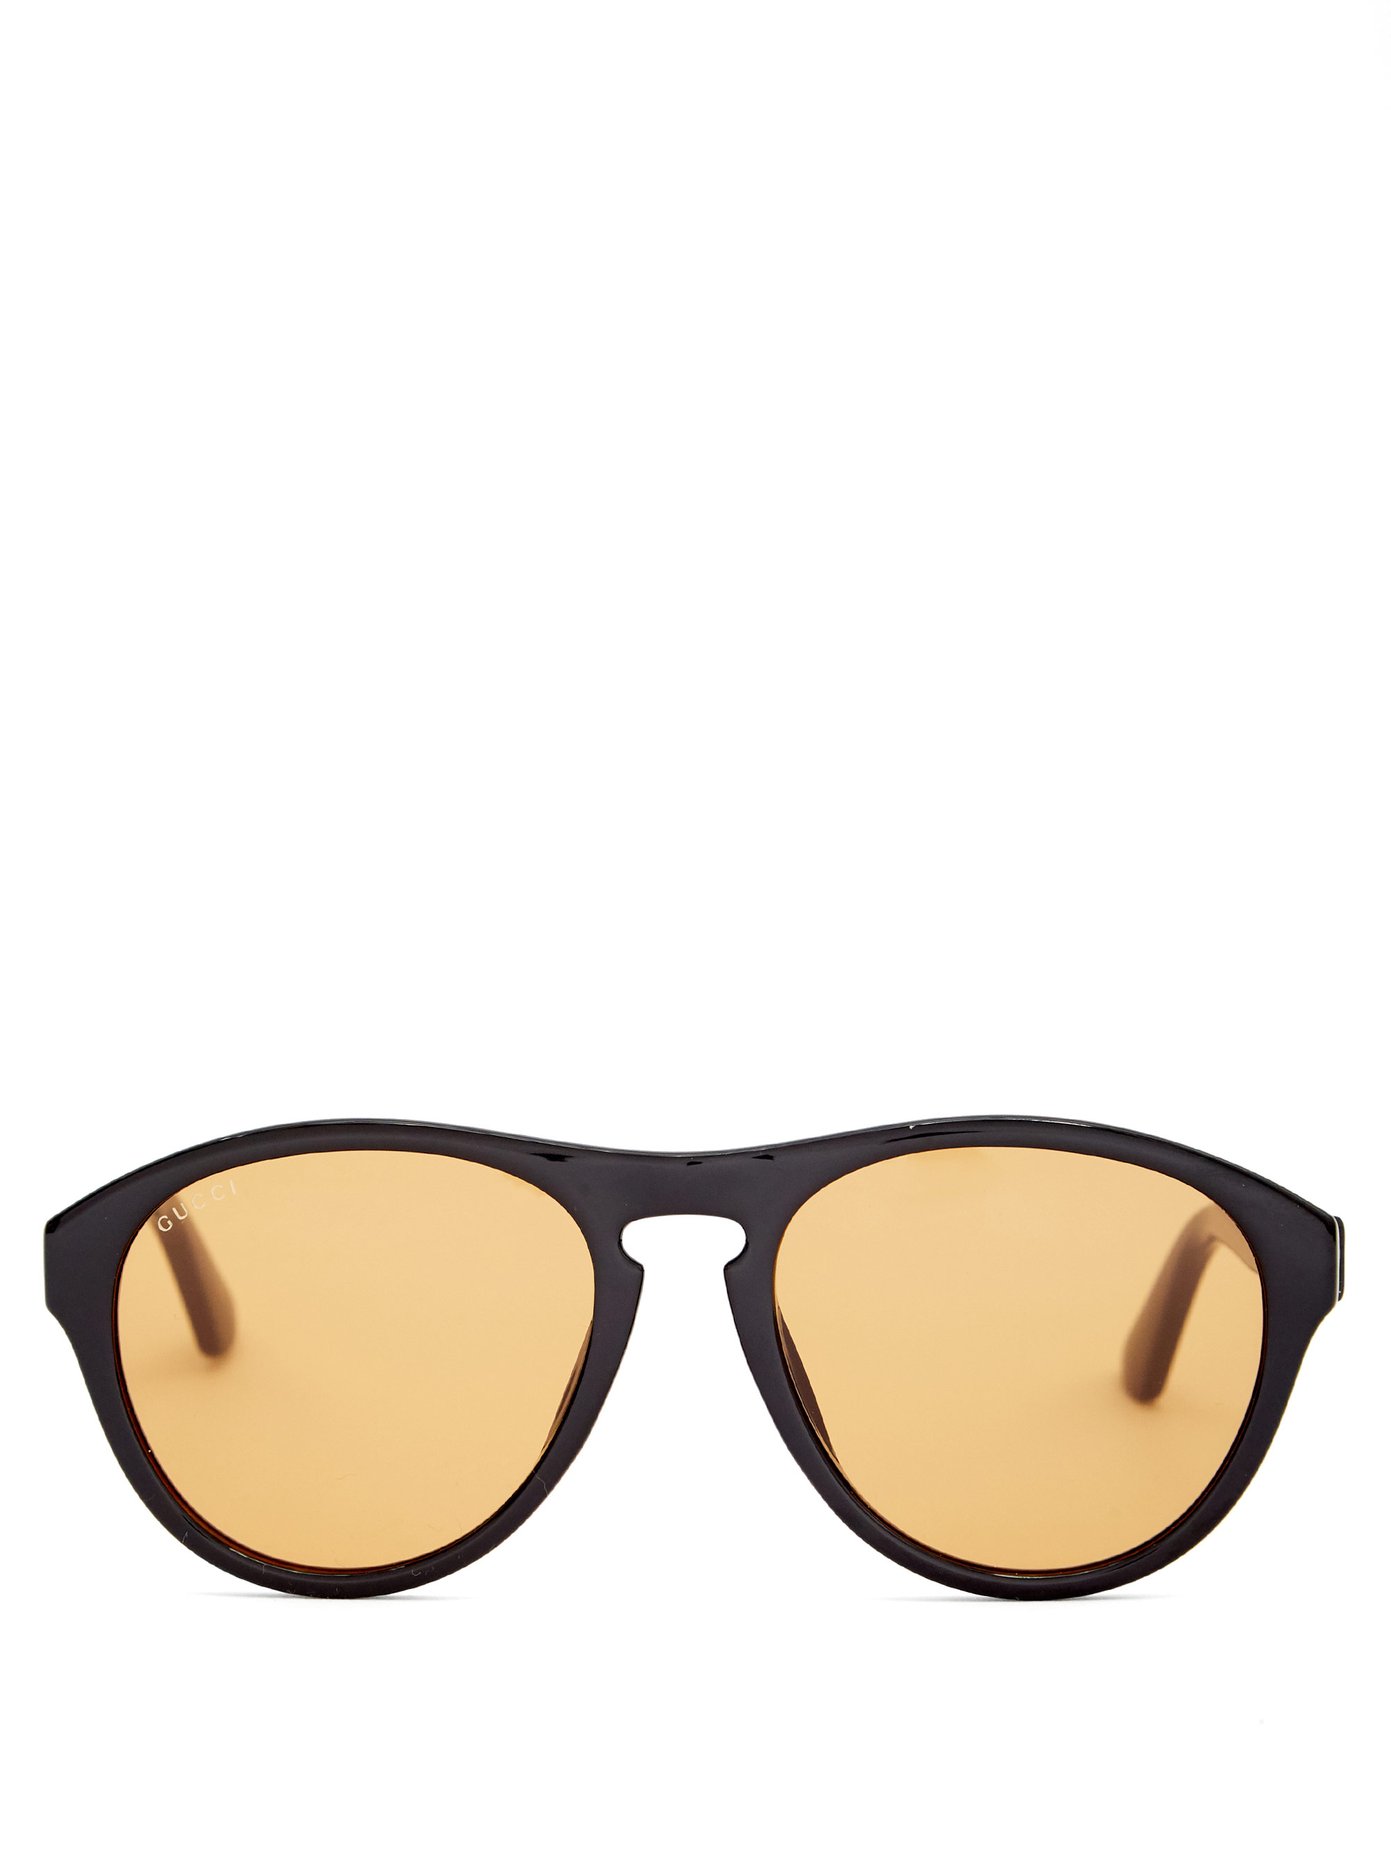 gucci round acetate sunglasses